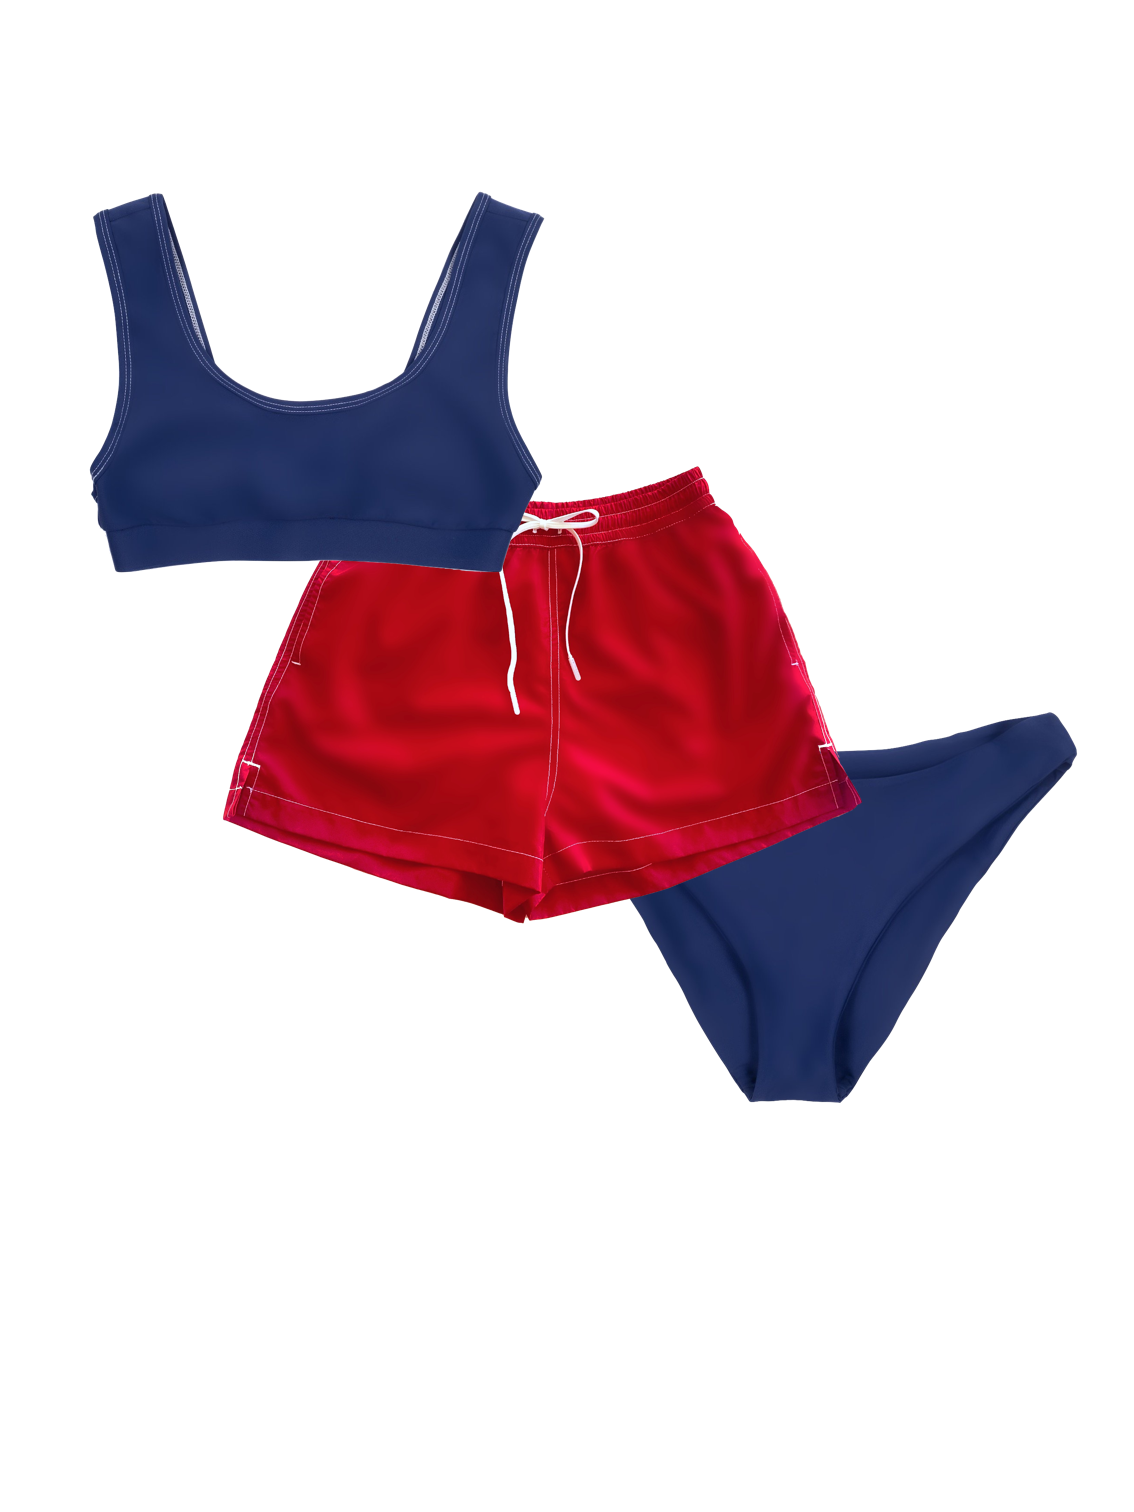 Patriotic Swimwear Set Trunks Top Bikini